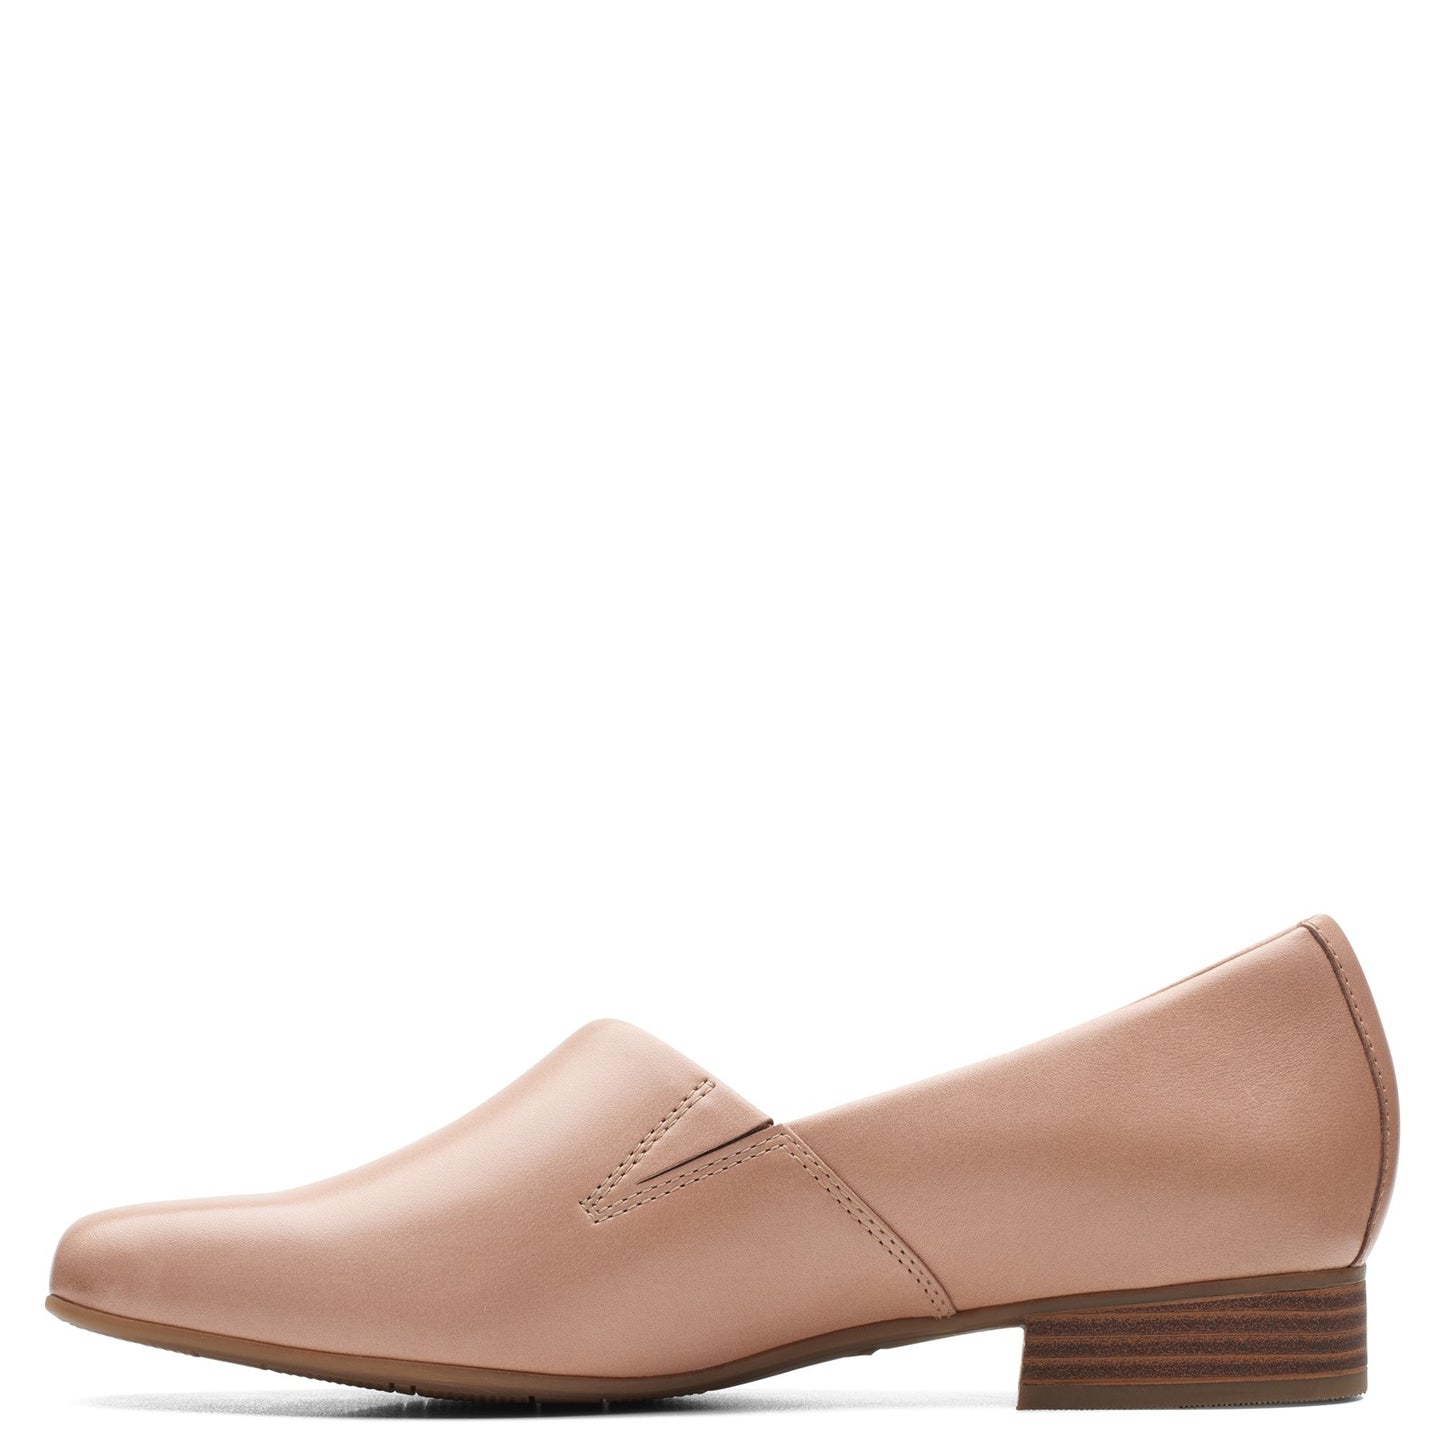 Peltz Shoes  Women's Clarks Tilmont Ease Loafer BLUSH 26163821